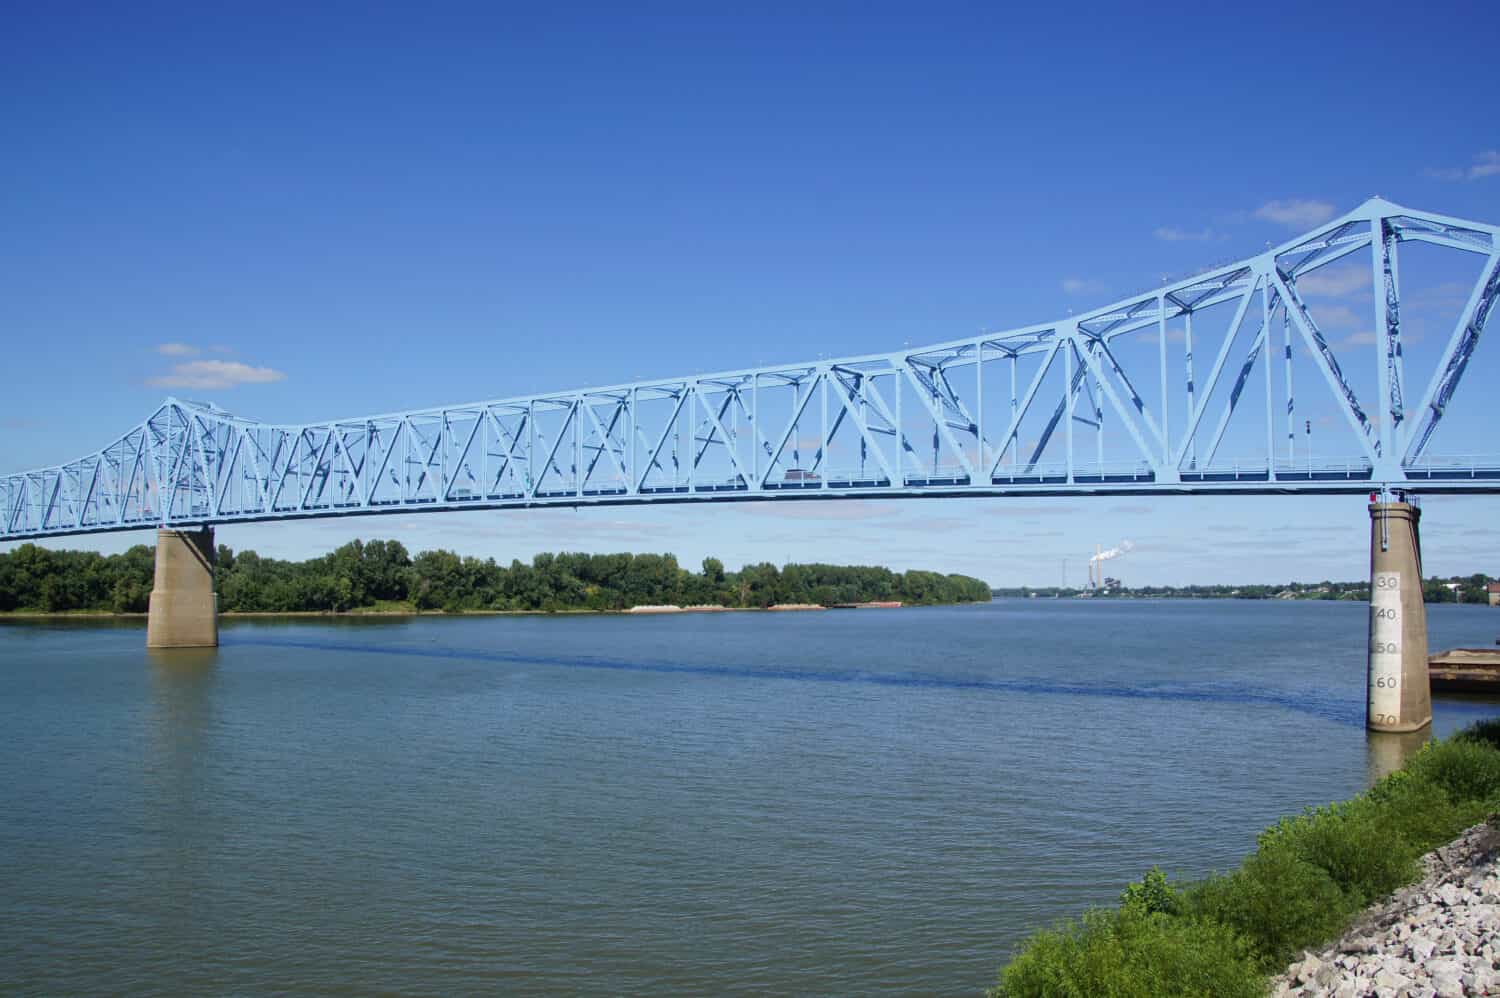 The "Blue Bridge" in Owensboro, KY